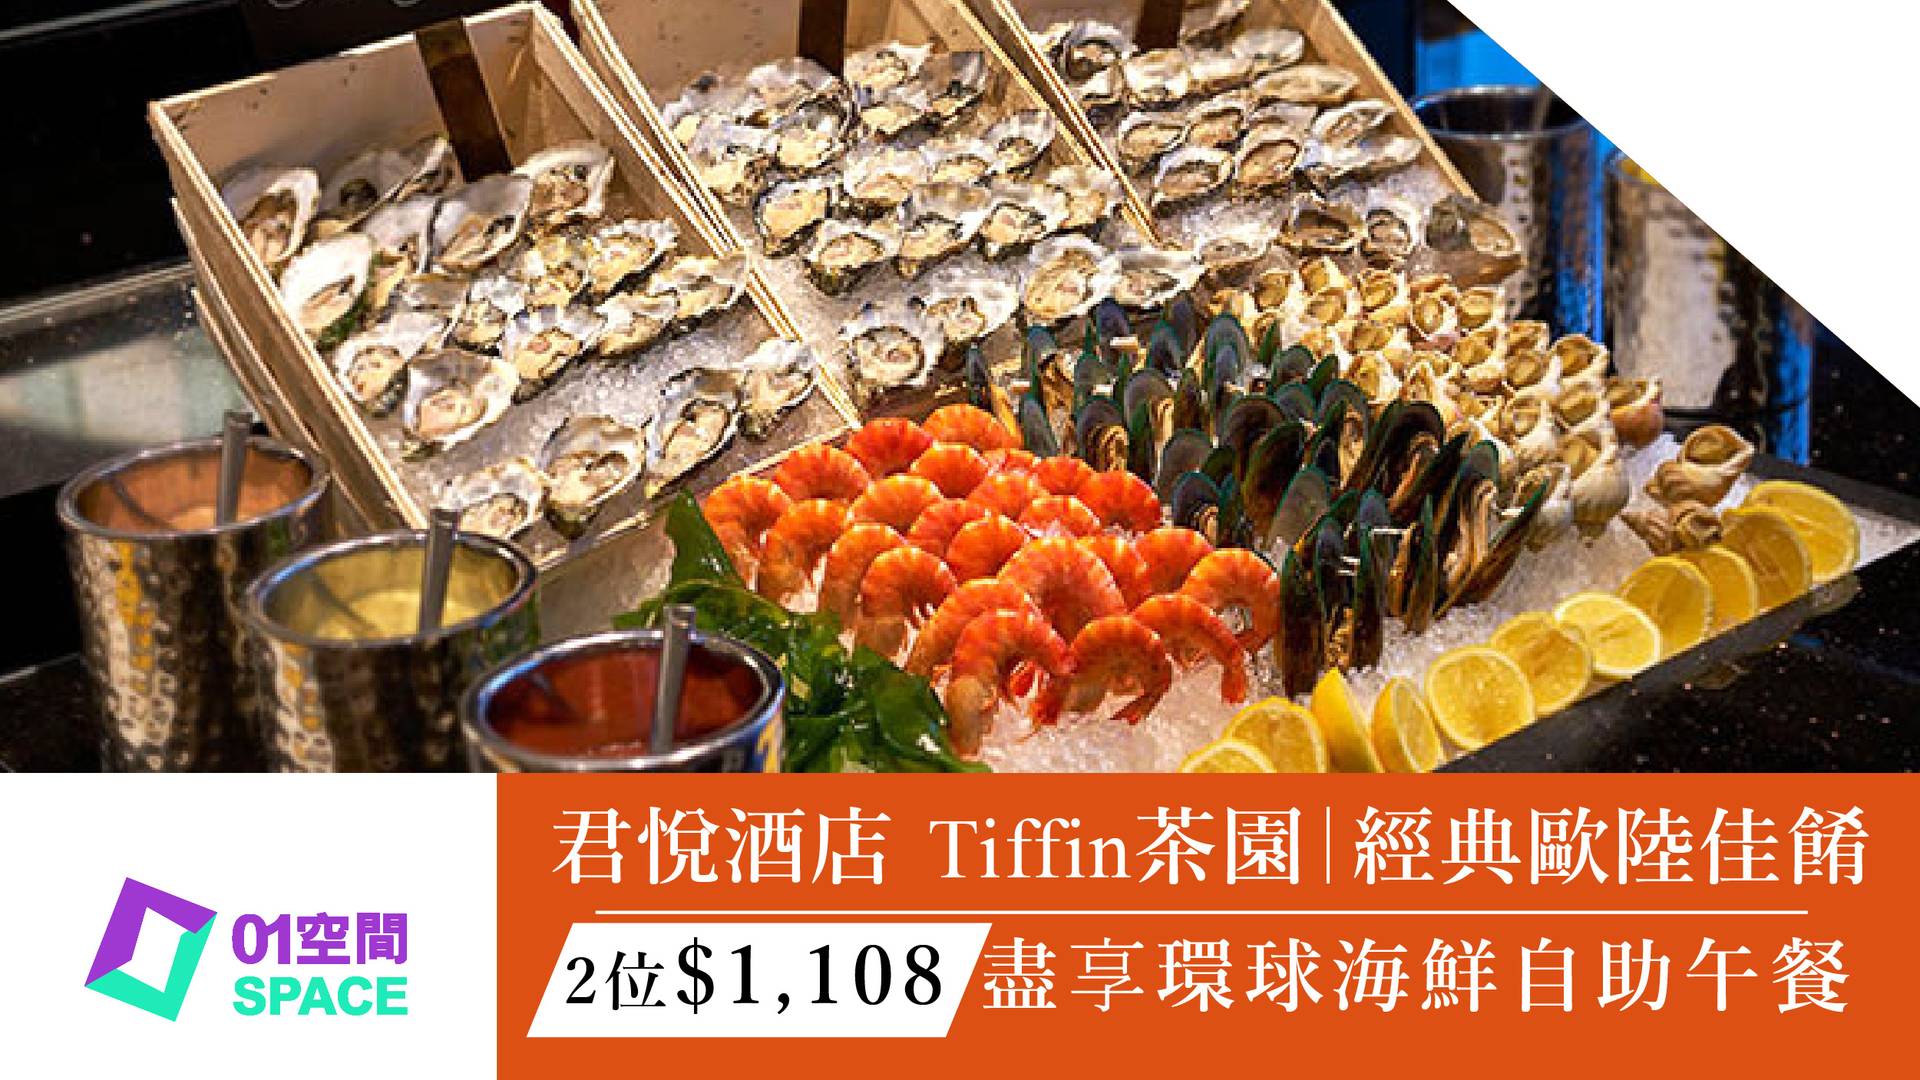 Grand Hyatt Tiffin 茶園 自助午餐｜香港君悅酒店（需3個工作天前預訂）